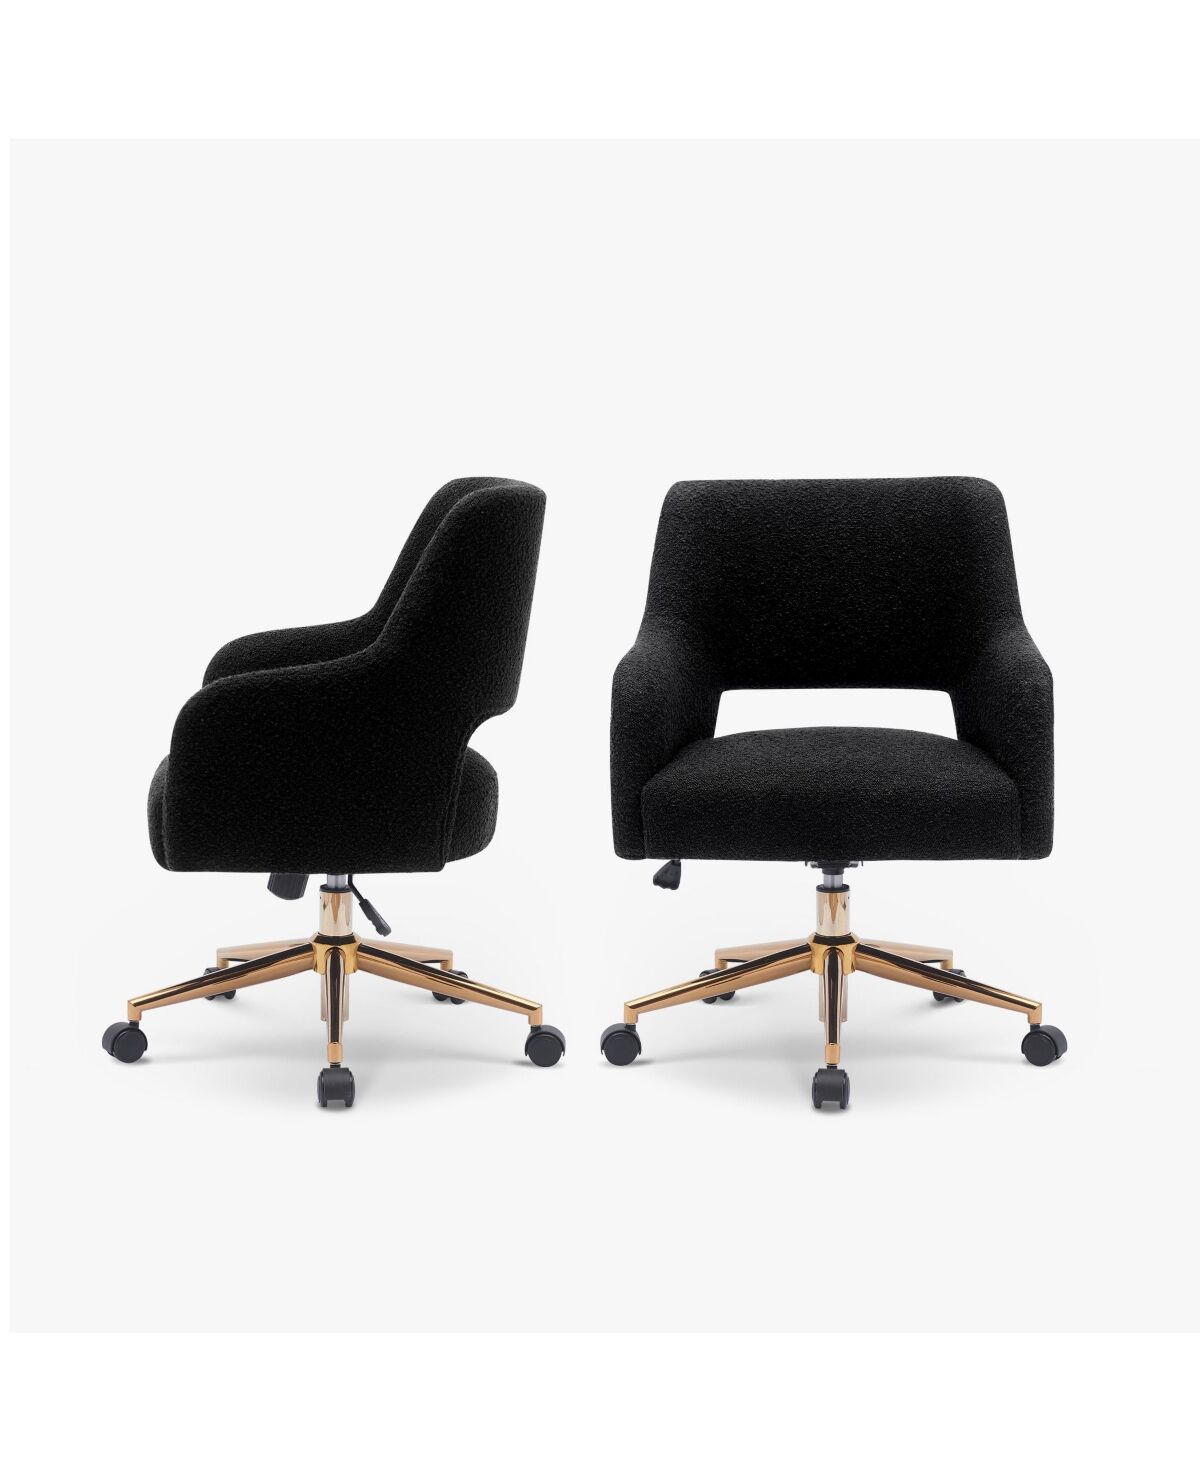 Westintrends Mid-Century Modern Swivel Office Vanity Chair with Wheels (Set of 2) - Black